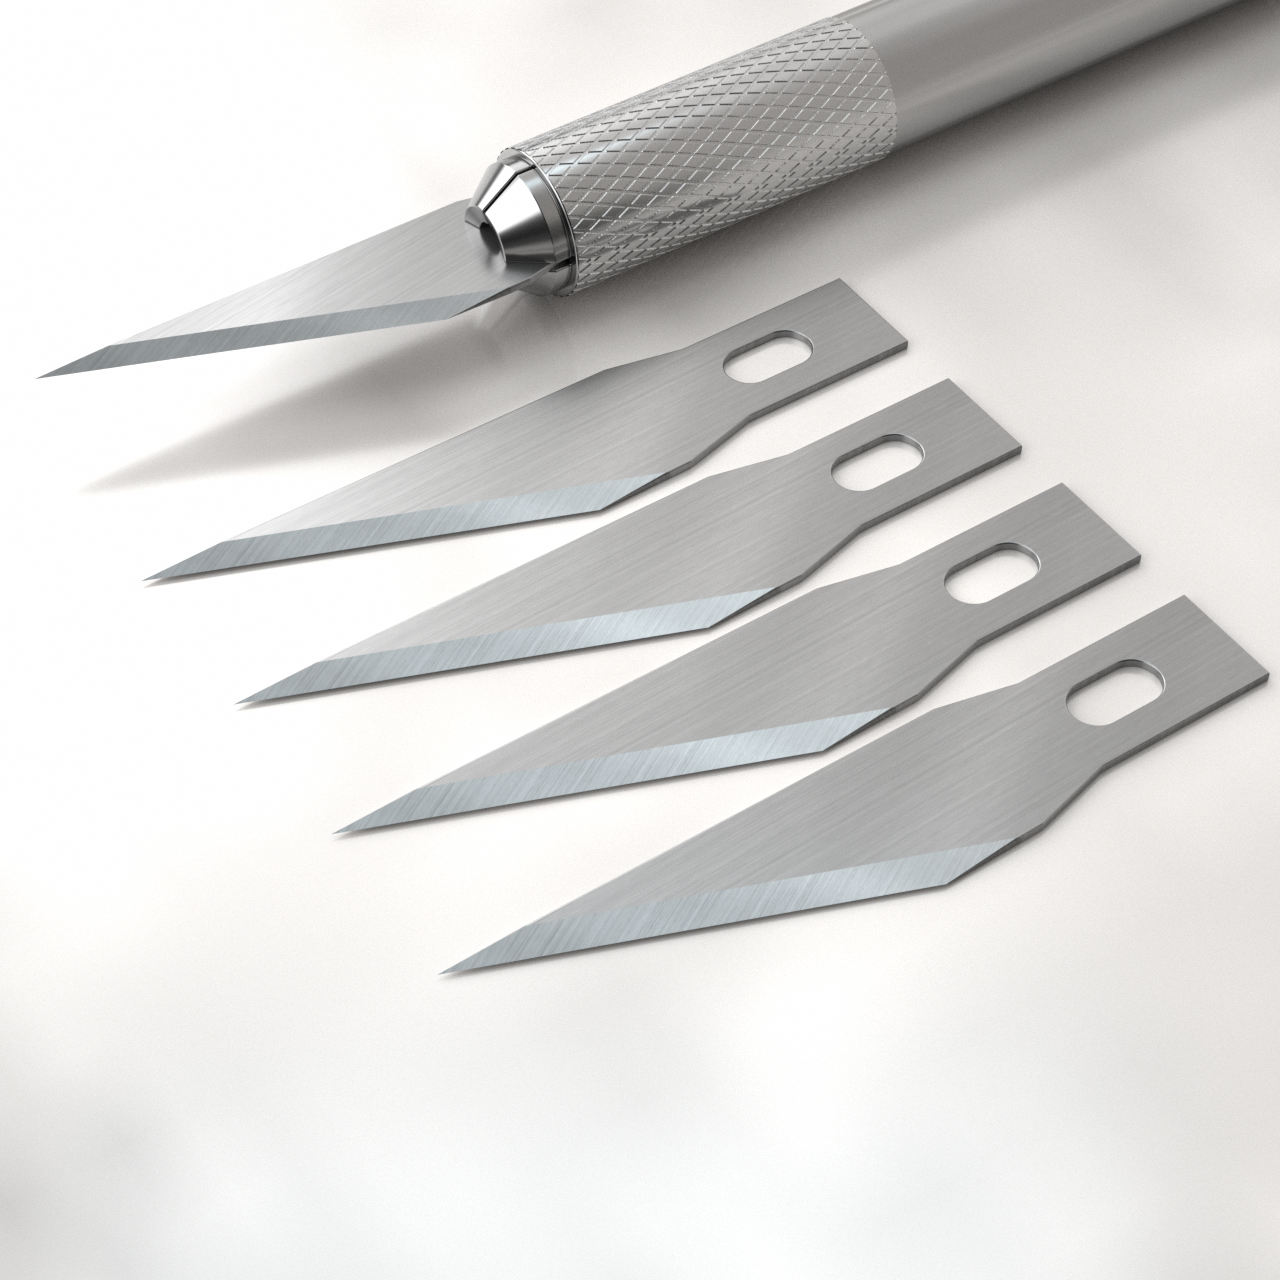 Nicpro 123 PCS Precision Cutter Hobby Knife Set,3 Hobby Exacto Knife w